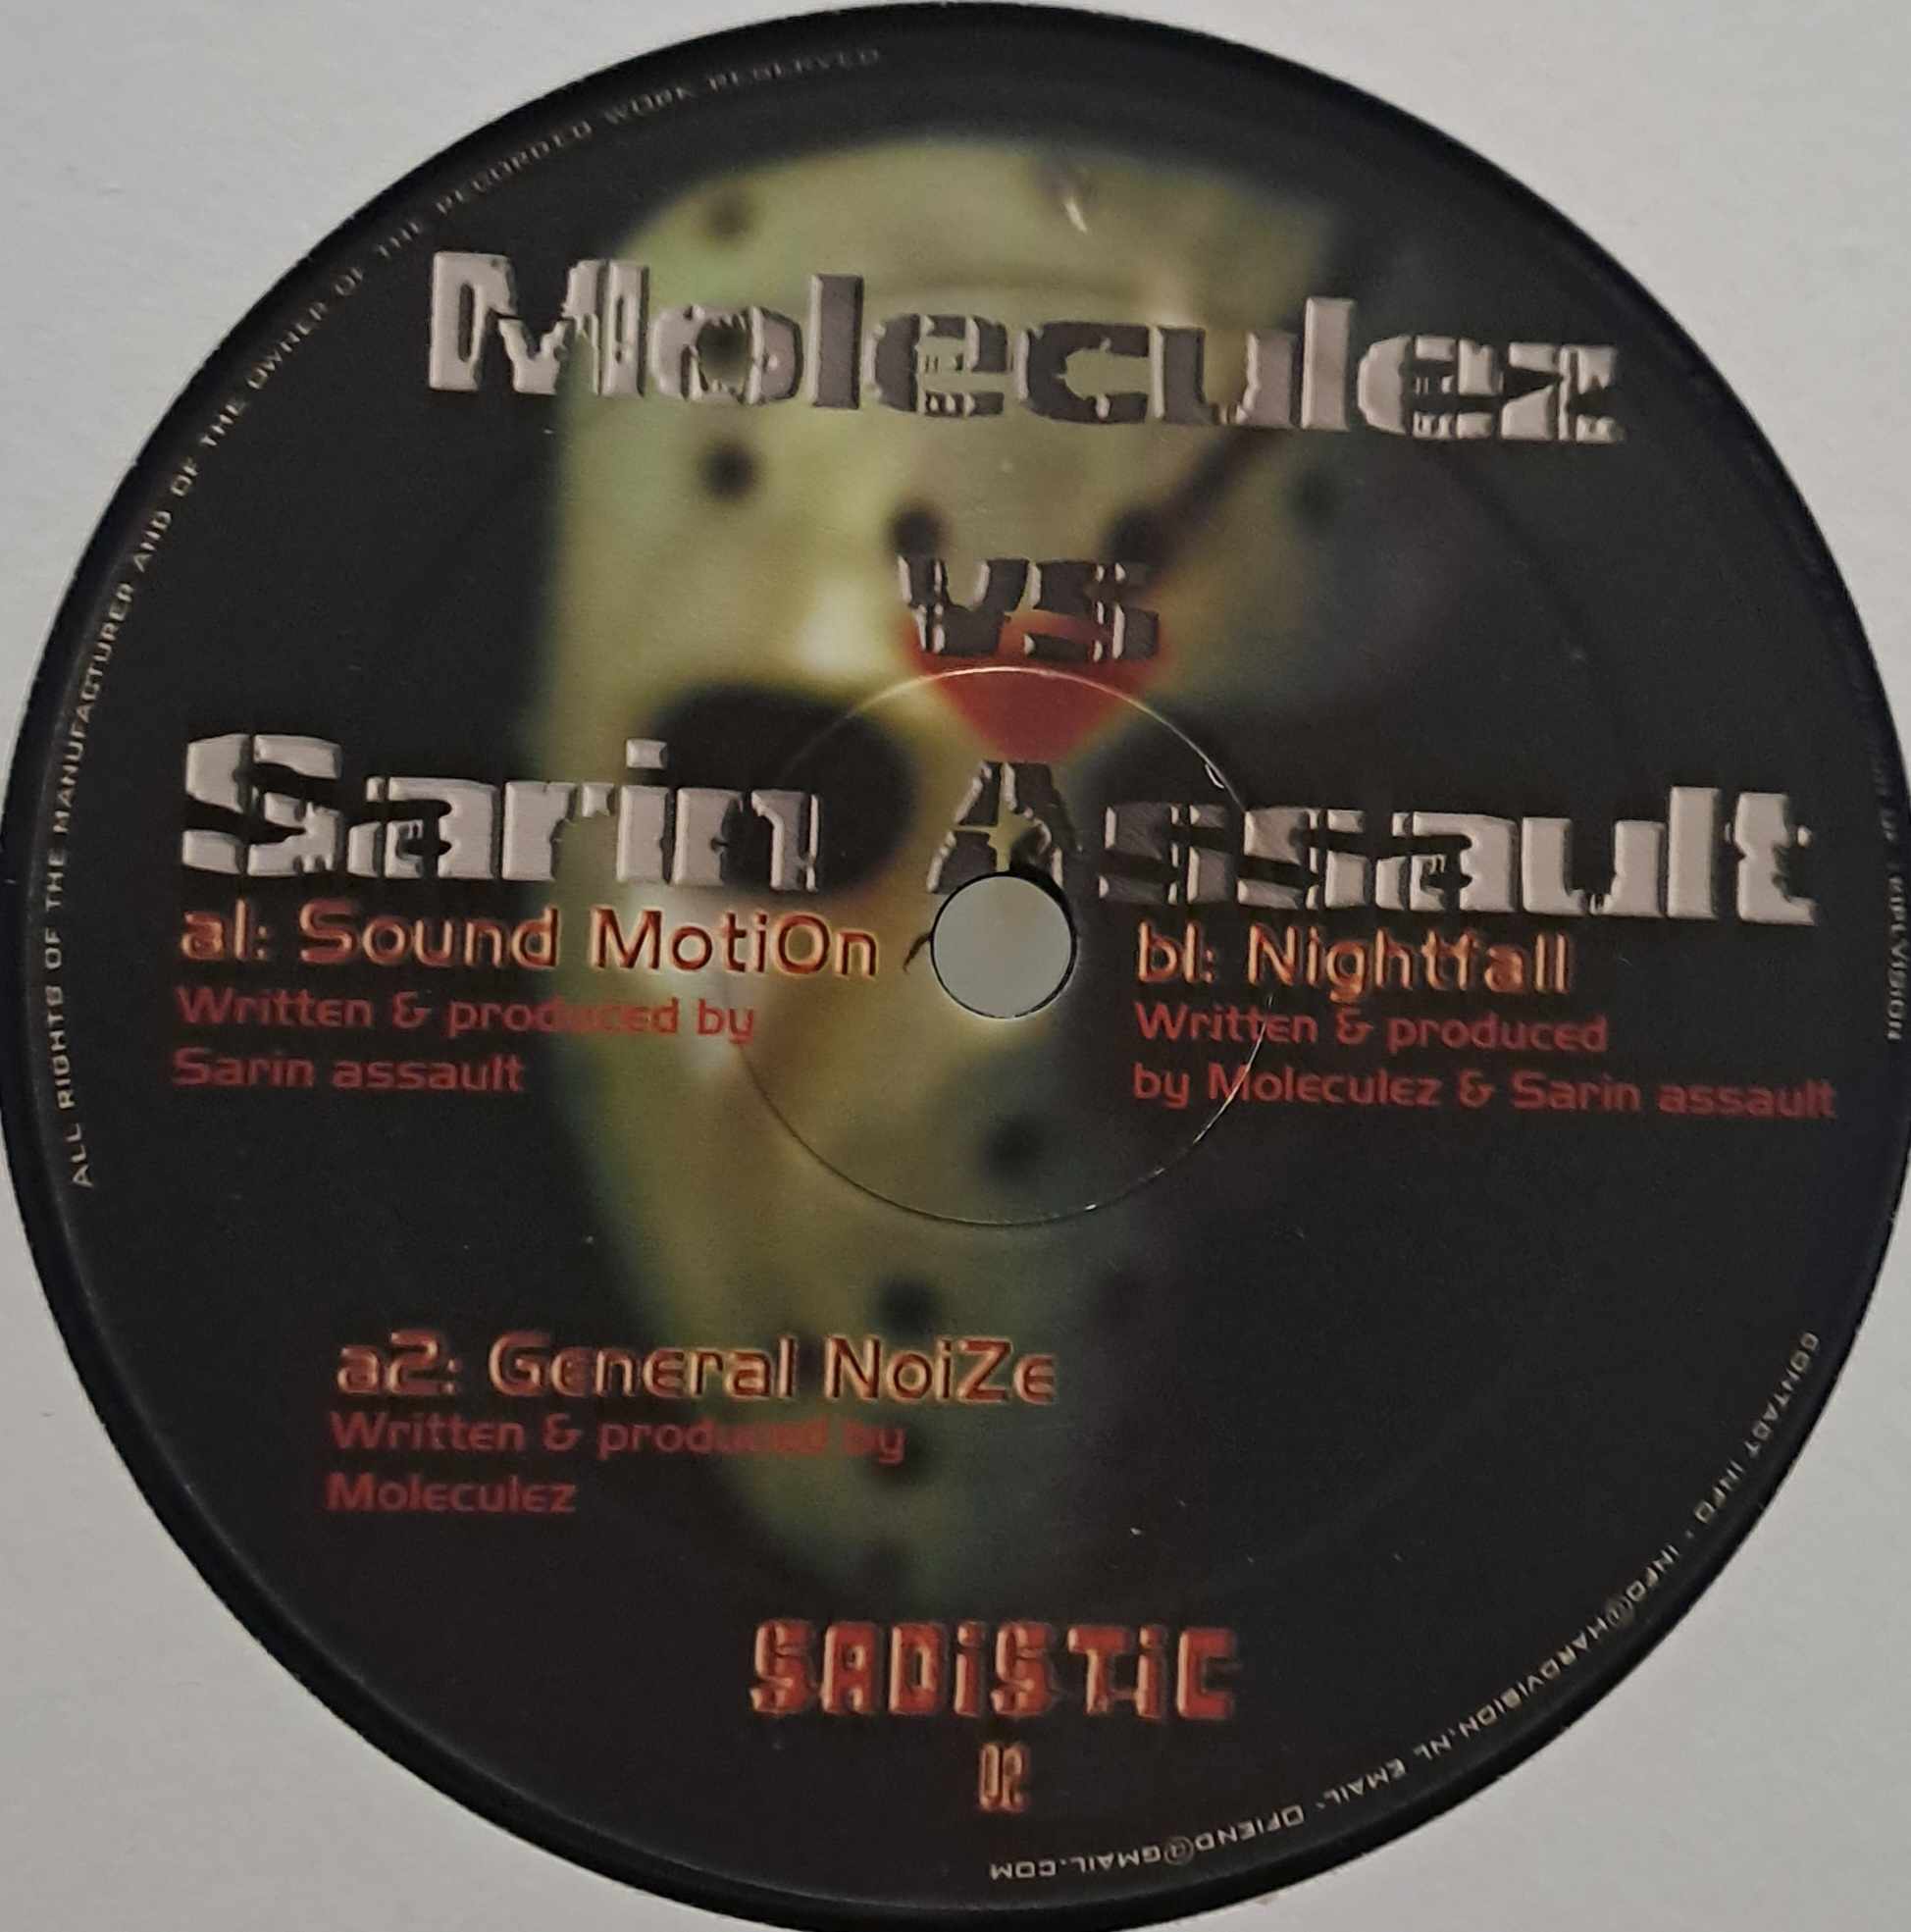 Sadistic 02 - vinyle hardcore